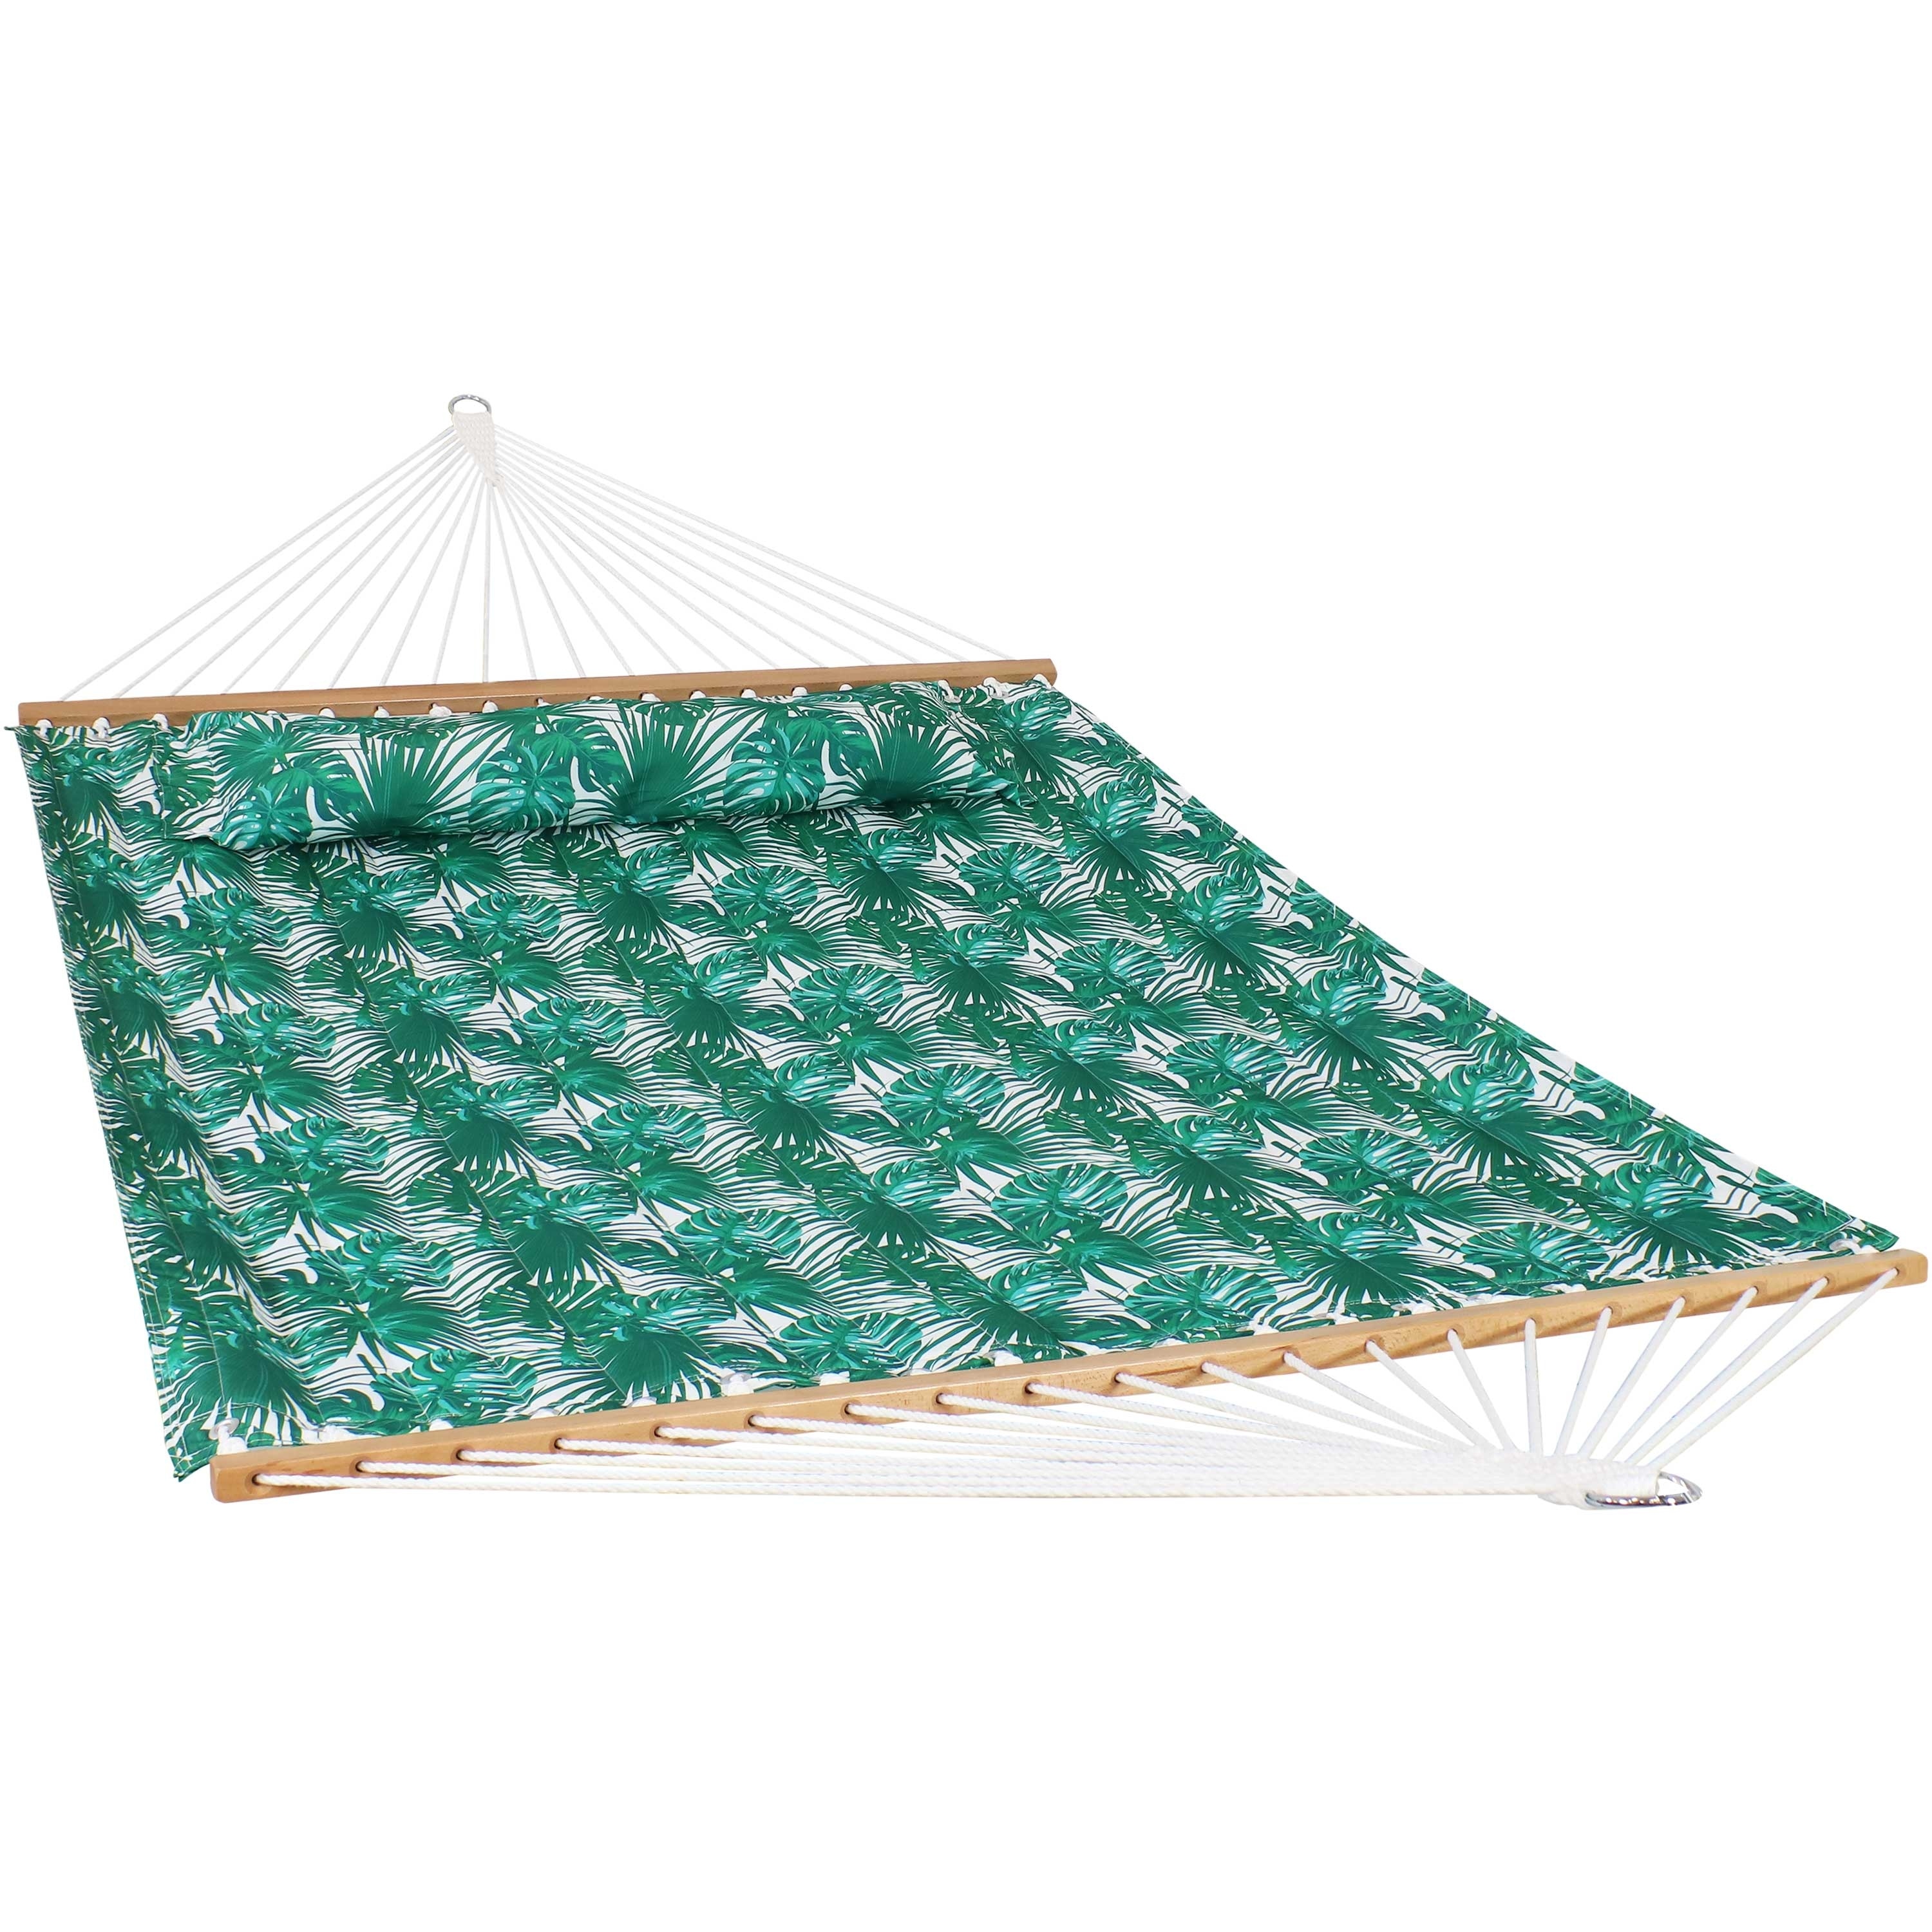 Sunnydaze Decor 2-Person Fabric Spreader Bar Hammock and Pillow - Green Palm Leaves